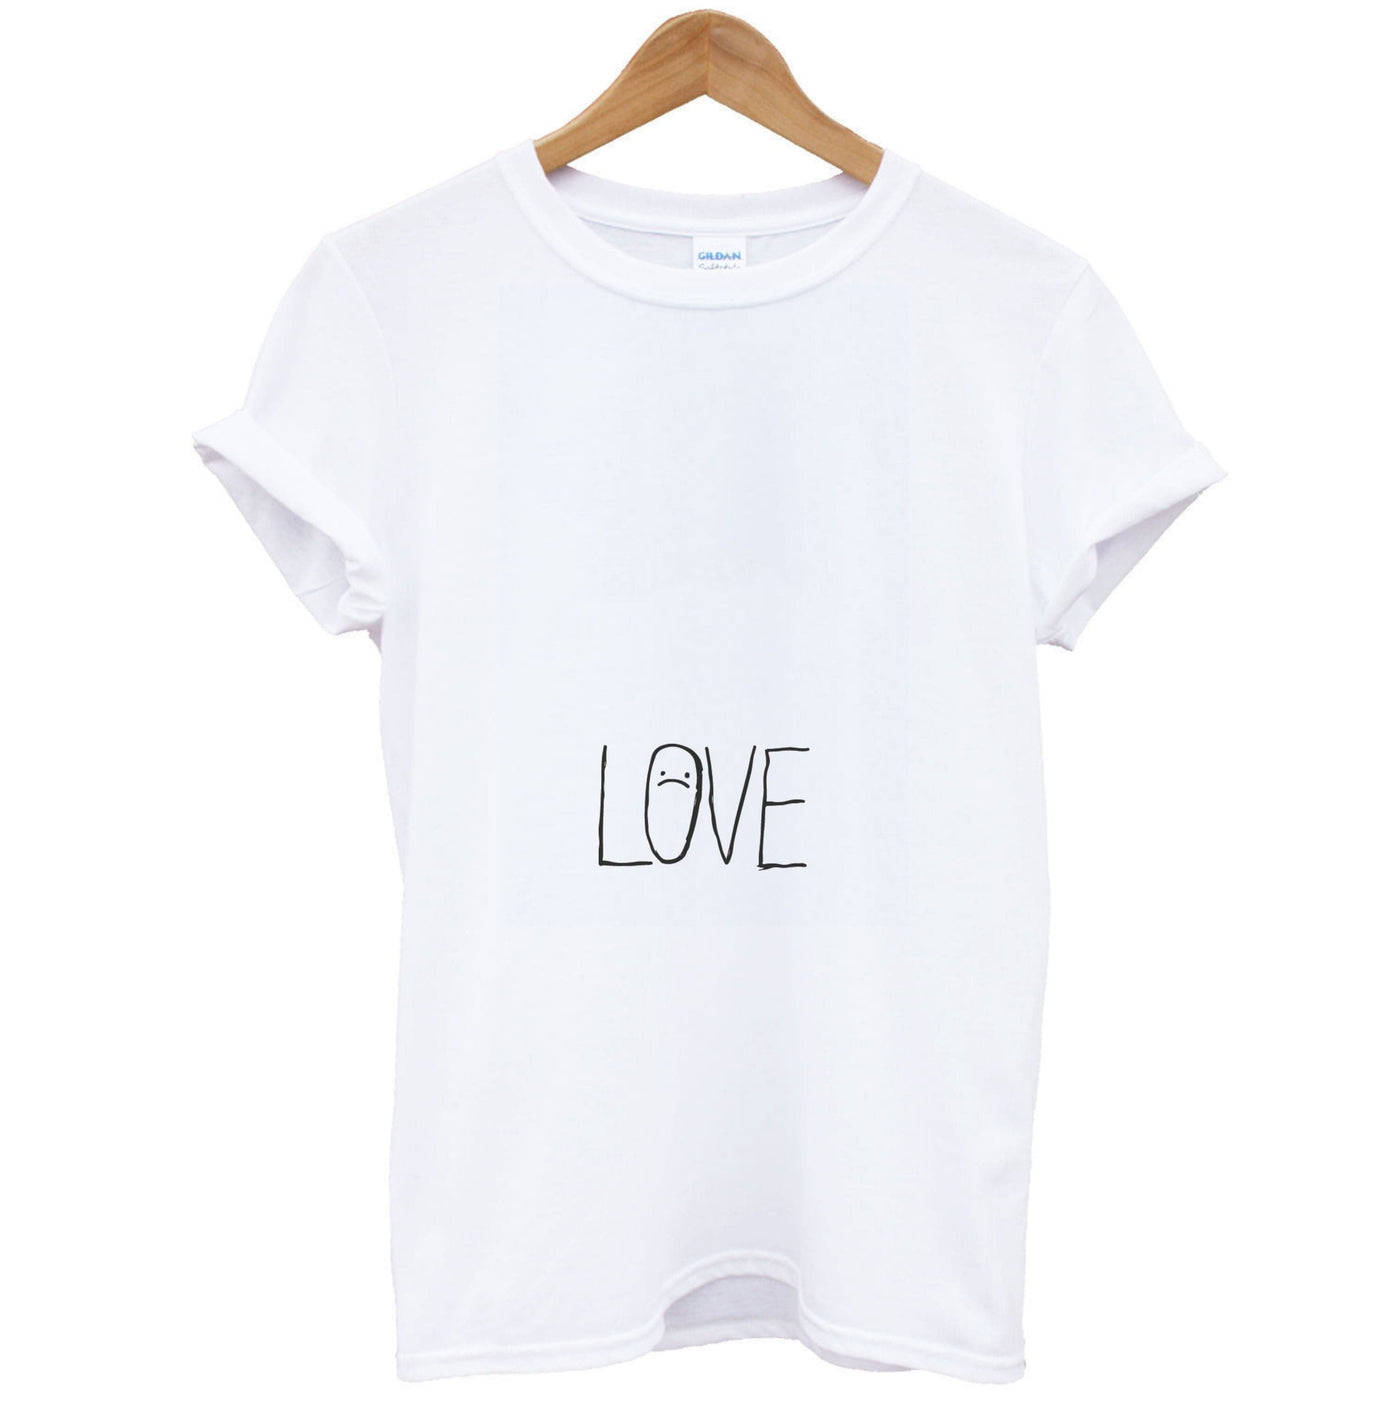 Love - Lil Peep T-Shirt